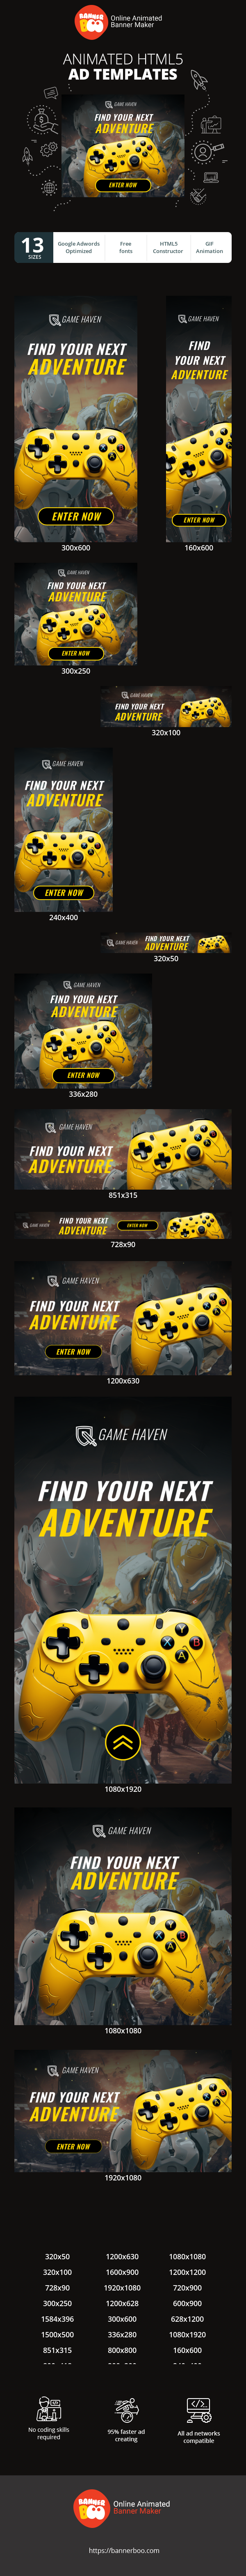 Шаблон рекламного банера — Find Your Next Adventure — Gaming